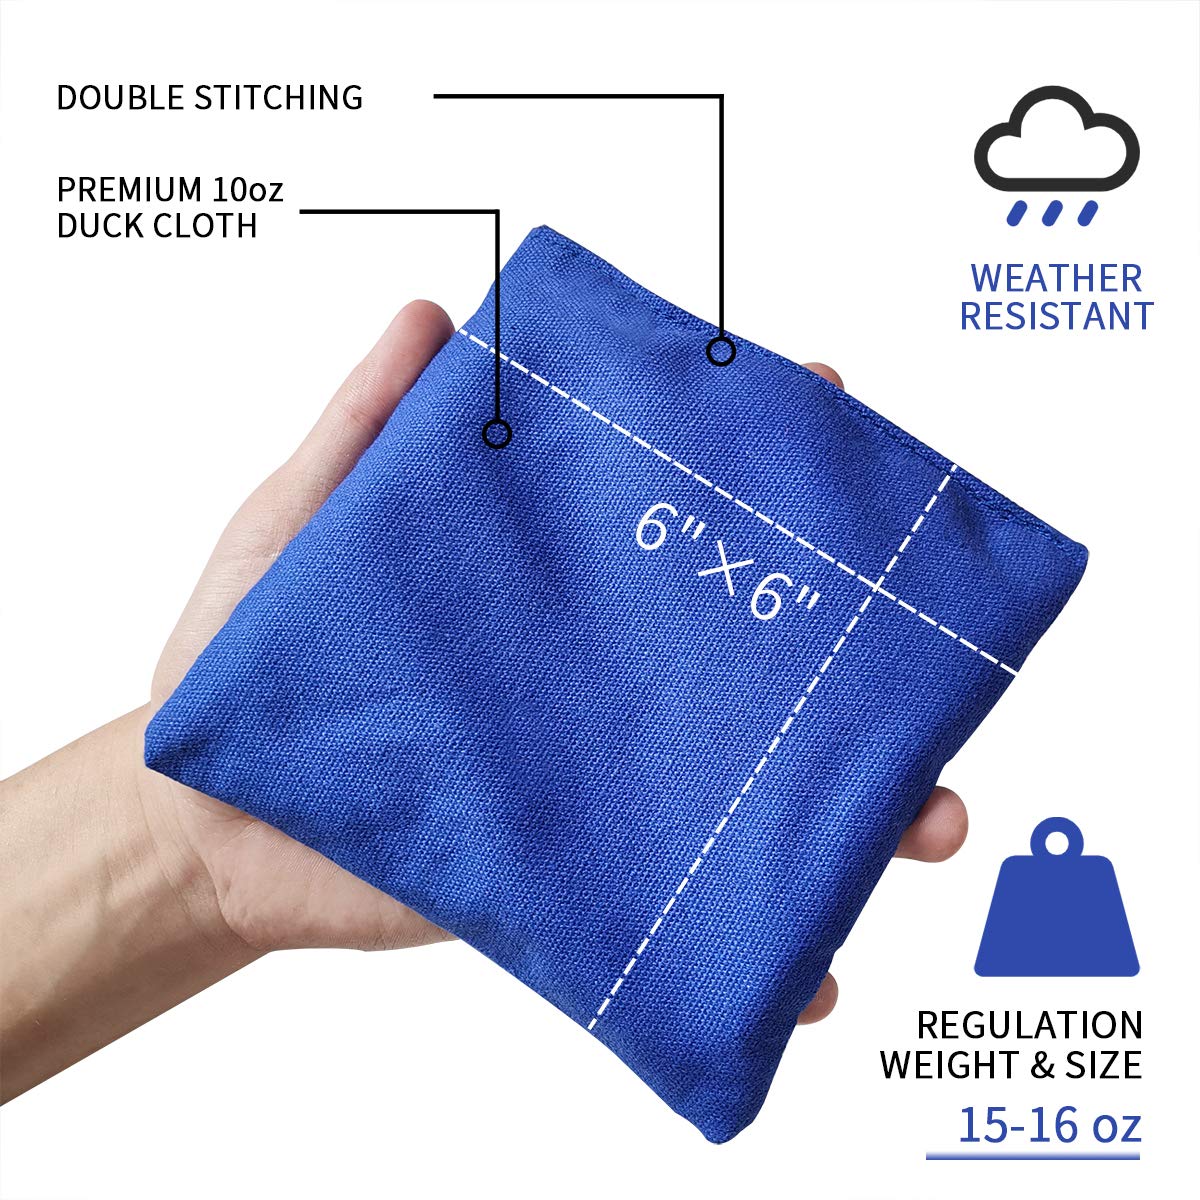 Nattork Cornhole Bags Premium Weather Duckcloth Corn Hole Bean Bags Cornhole Bags Set of 8 Regulation - Cornhole Toss Game - Red and Blue - Opticdeals